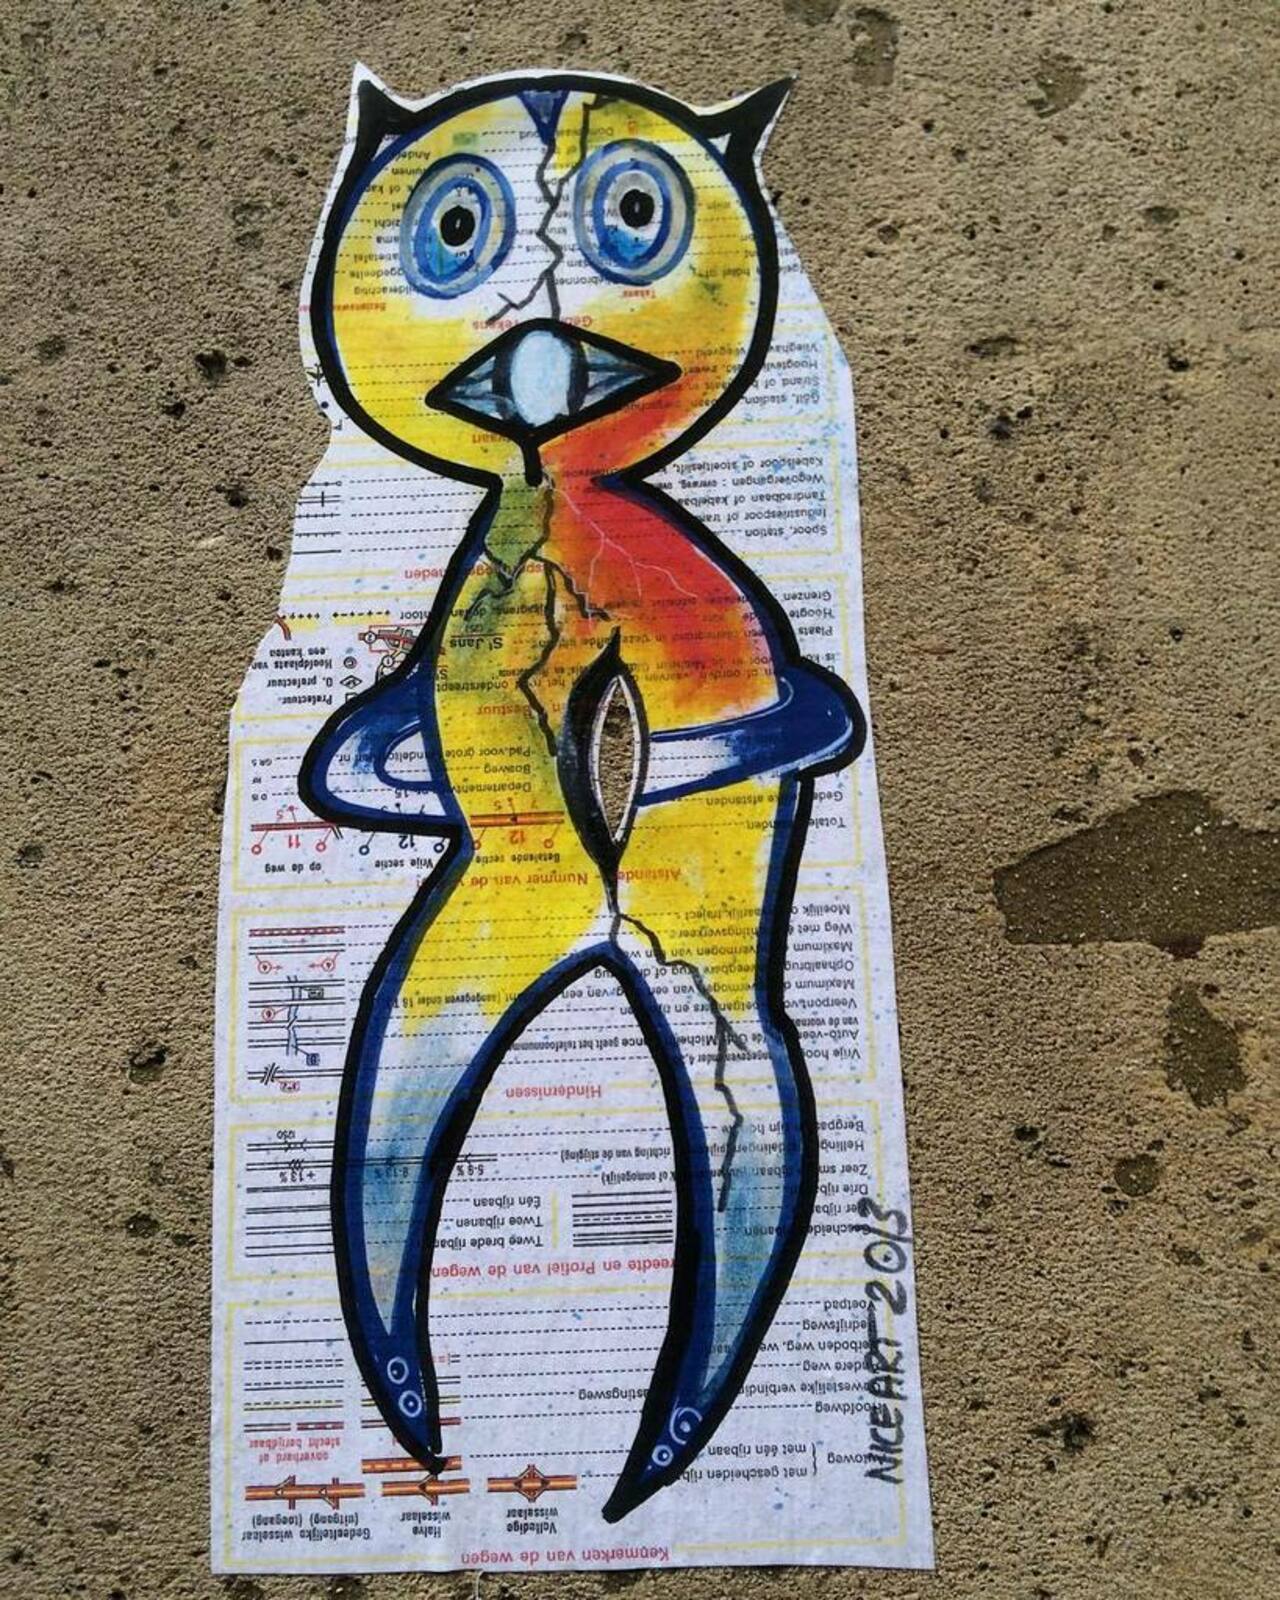 #streetphotography #parisstreetart #graffitart #graffiti #streetart #collage #stencils #welovestreetart #wallporn #… https://t.co/rtrbaa1UTn